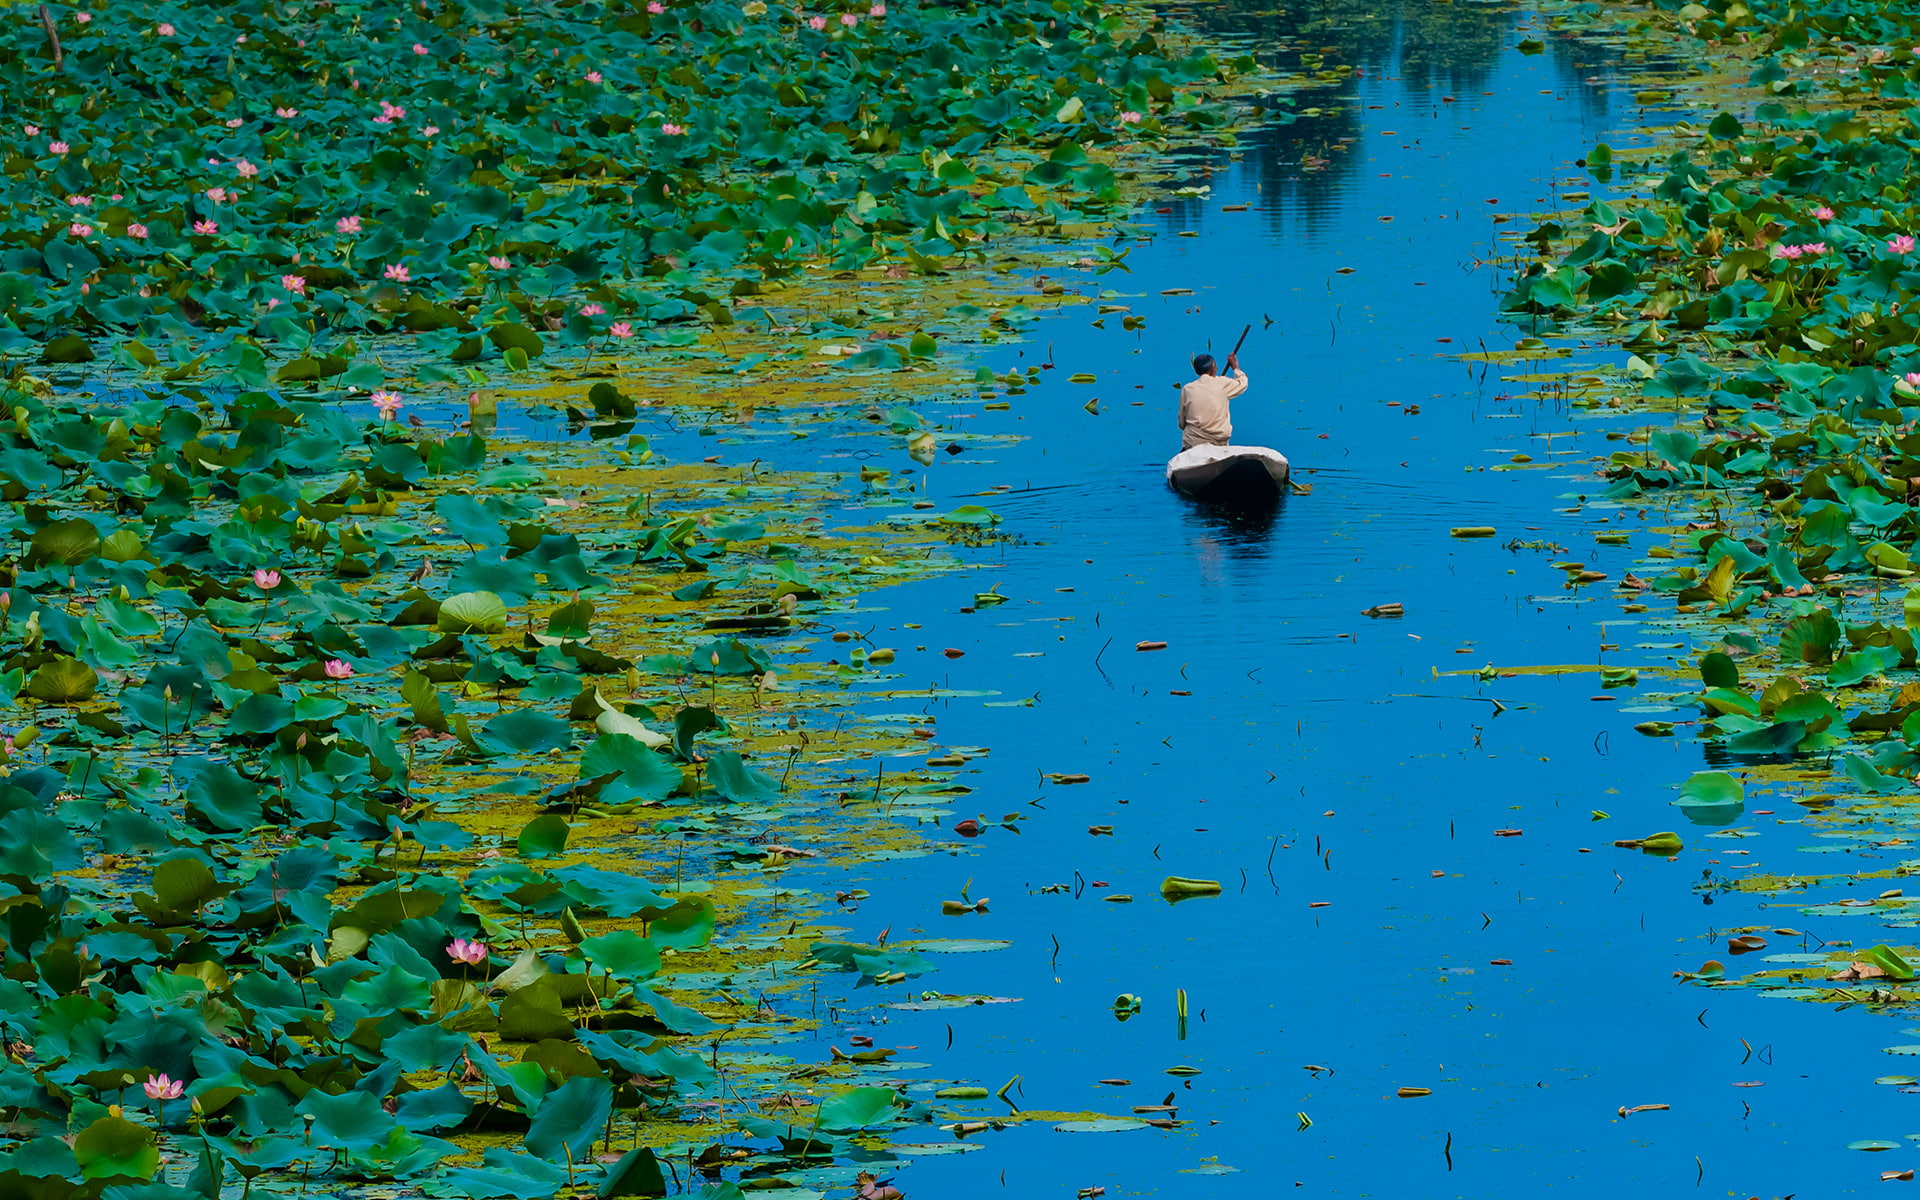 leaves, flowers, boat, India, Lotus, Dal lake, Srinagar, Jammu and Kashmir